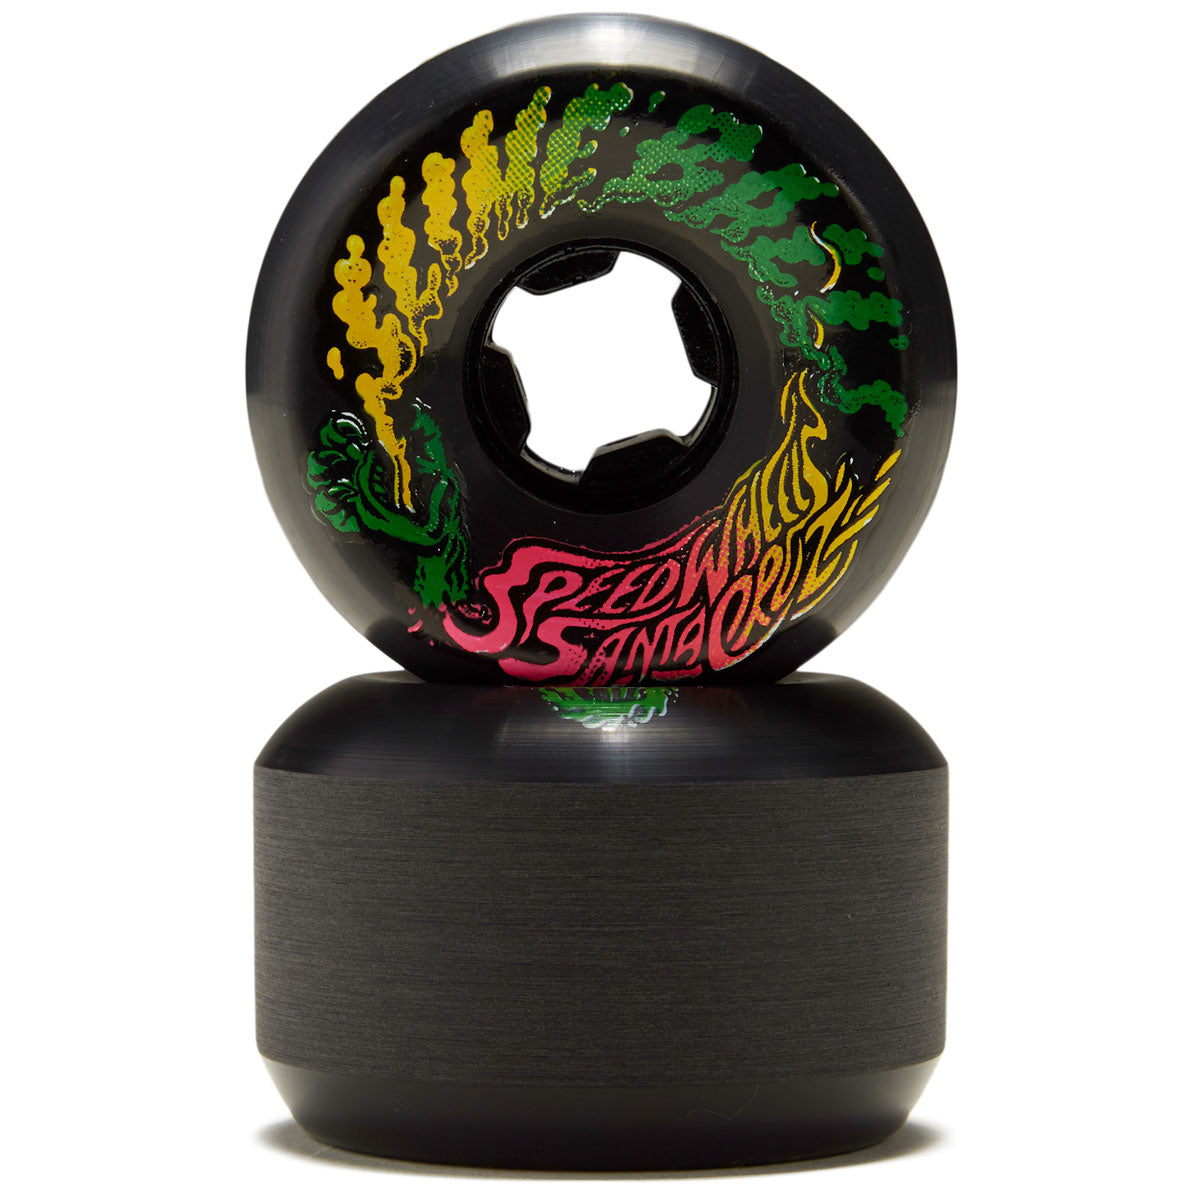 Slime Balls Big Balls 97A Skateboard Wheels - Teal/Black Swirl - 65mm